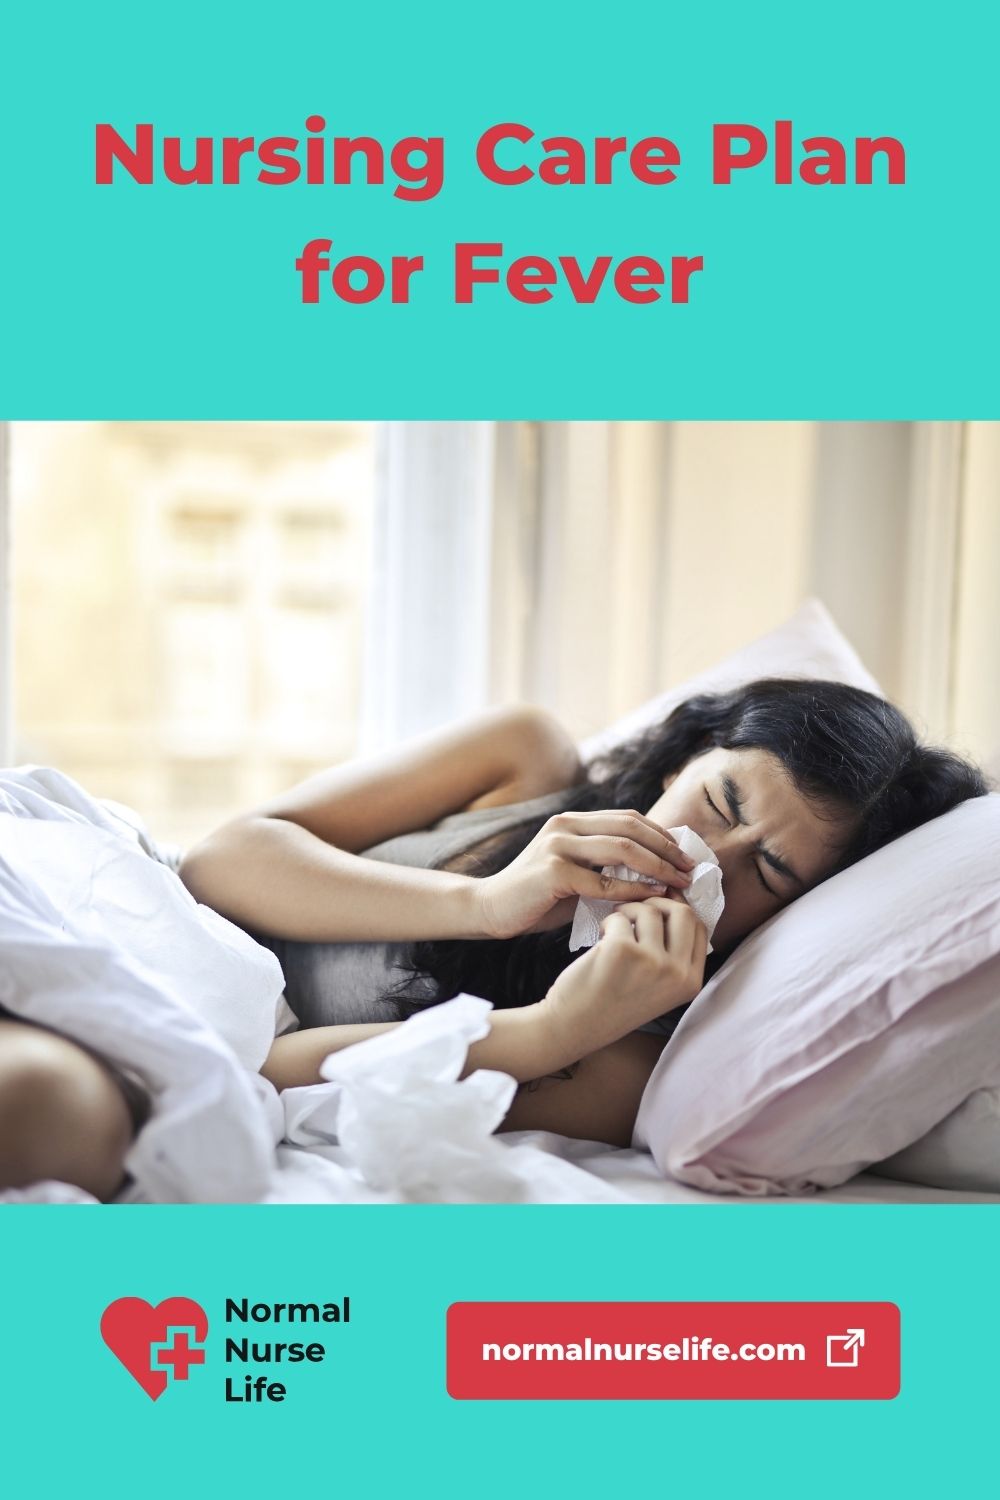 Nursing care plan for fever/hyperthermia